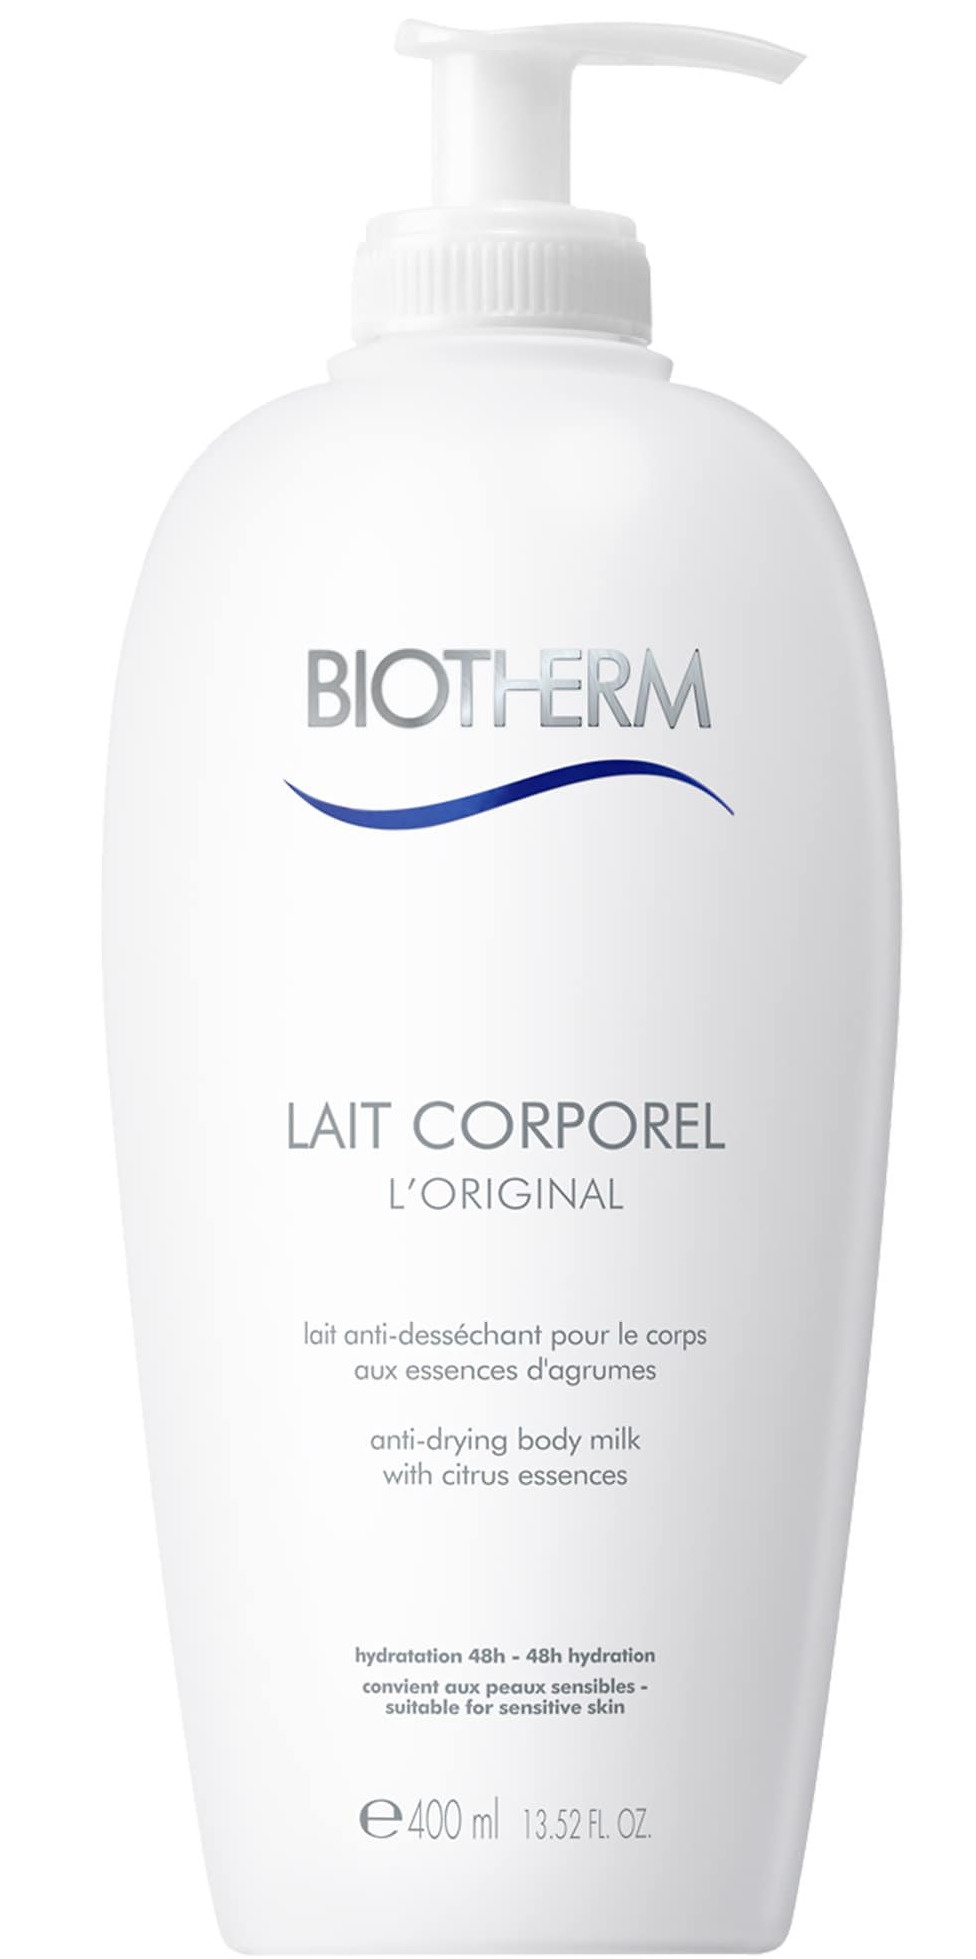 Biotherm Lait Corporel Body Lotion